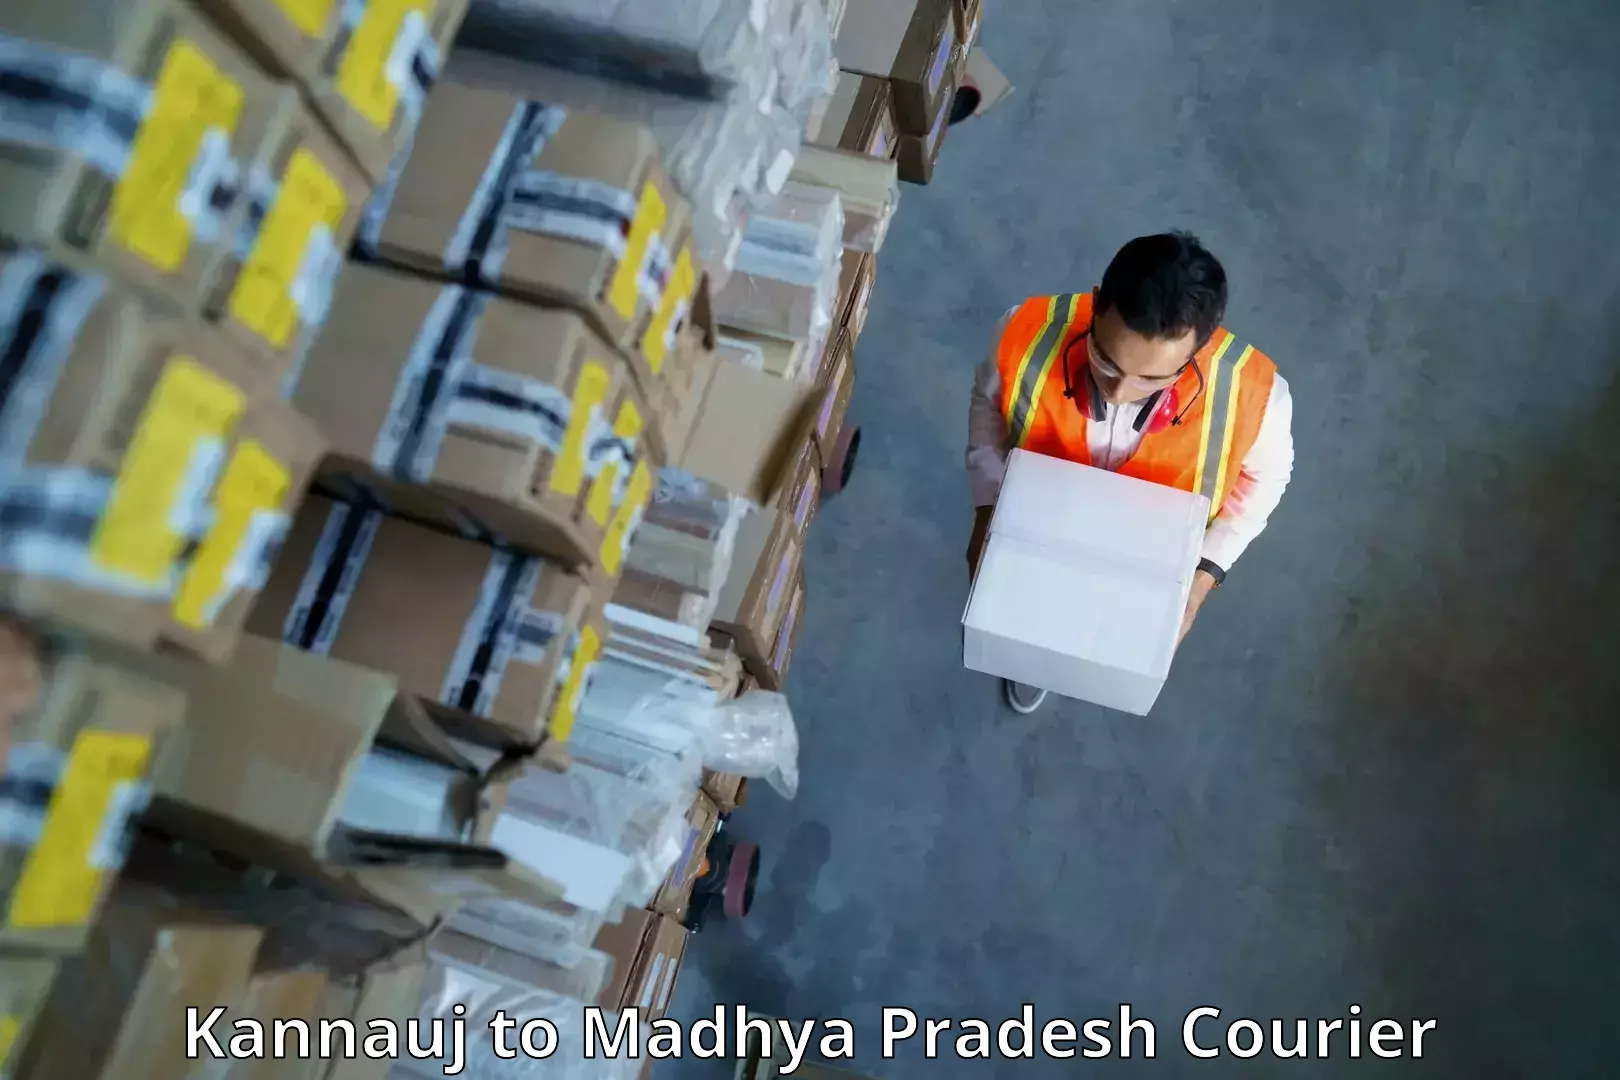 Courier service efficiency Kannauj to Dhar